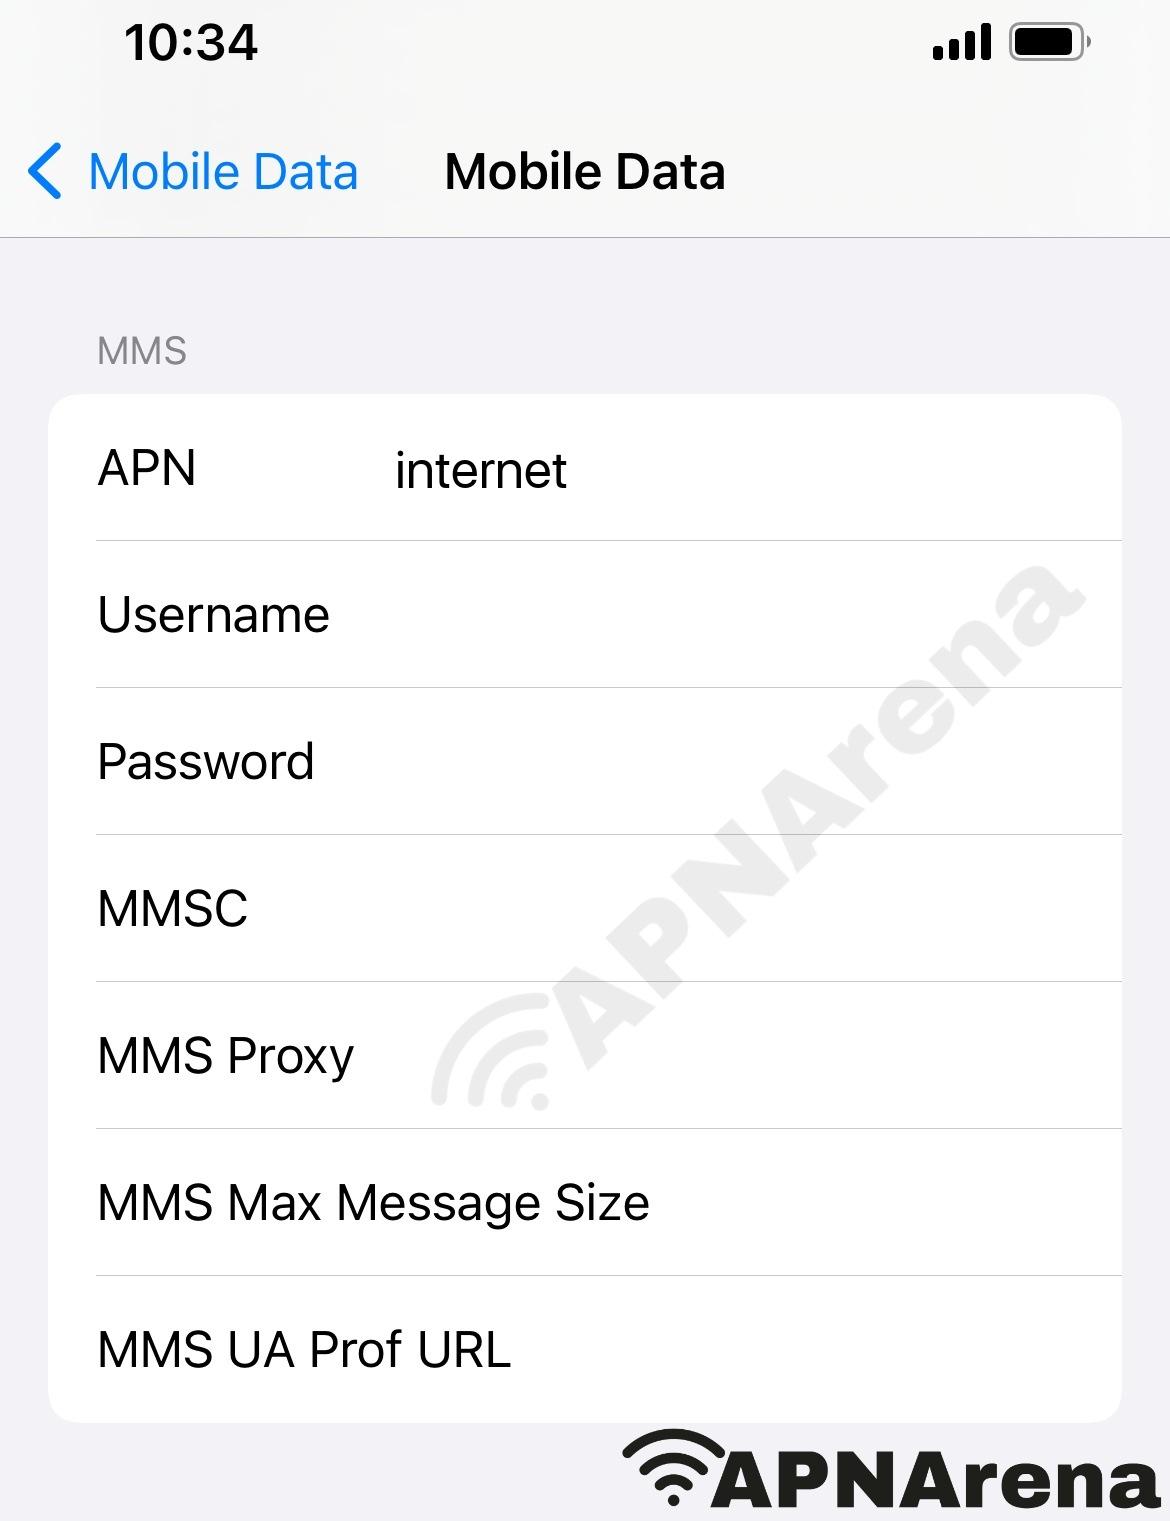 Rakuten Viber Malaysia MMS Settings for iPhone